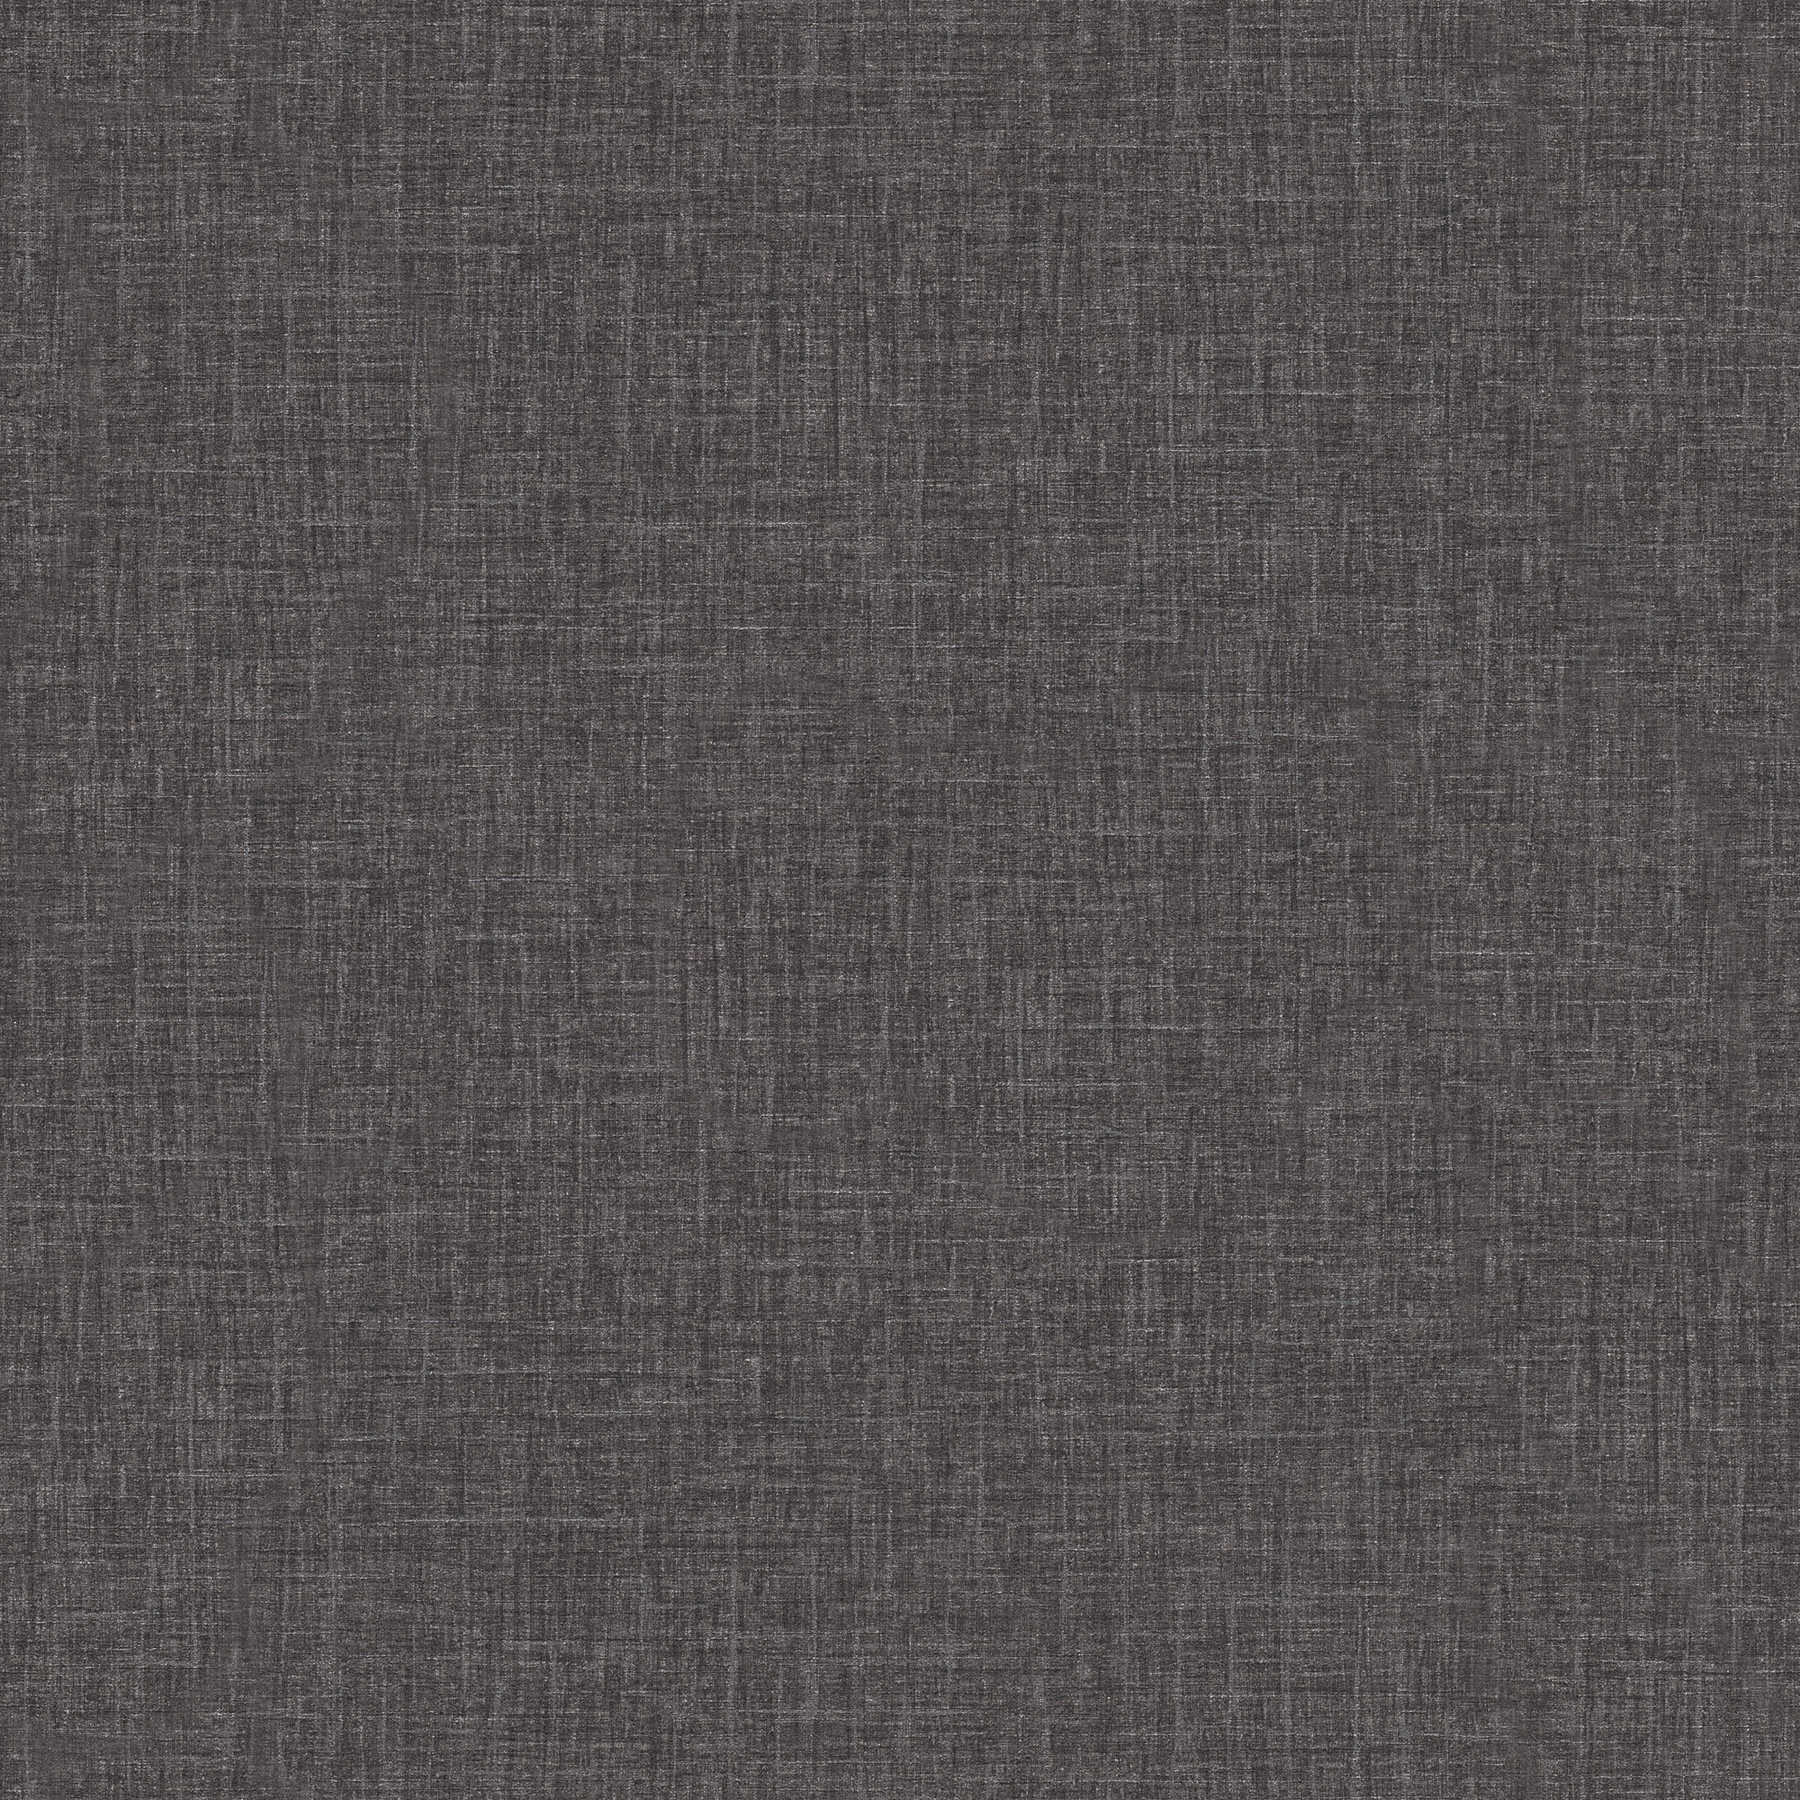 Plain wallpaper VERSACE in linen look with shimmer - black, grey
